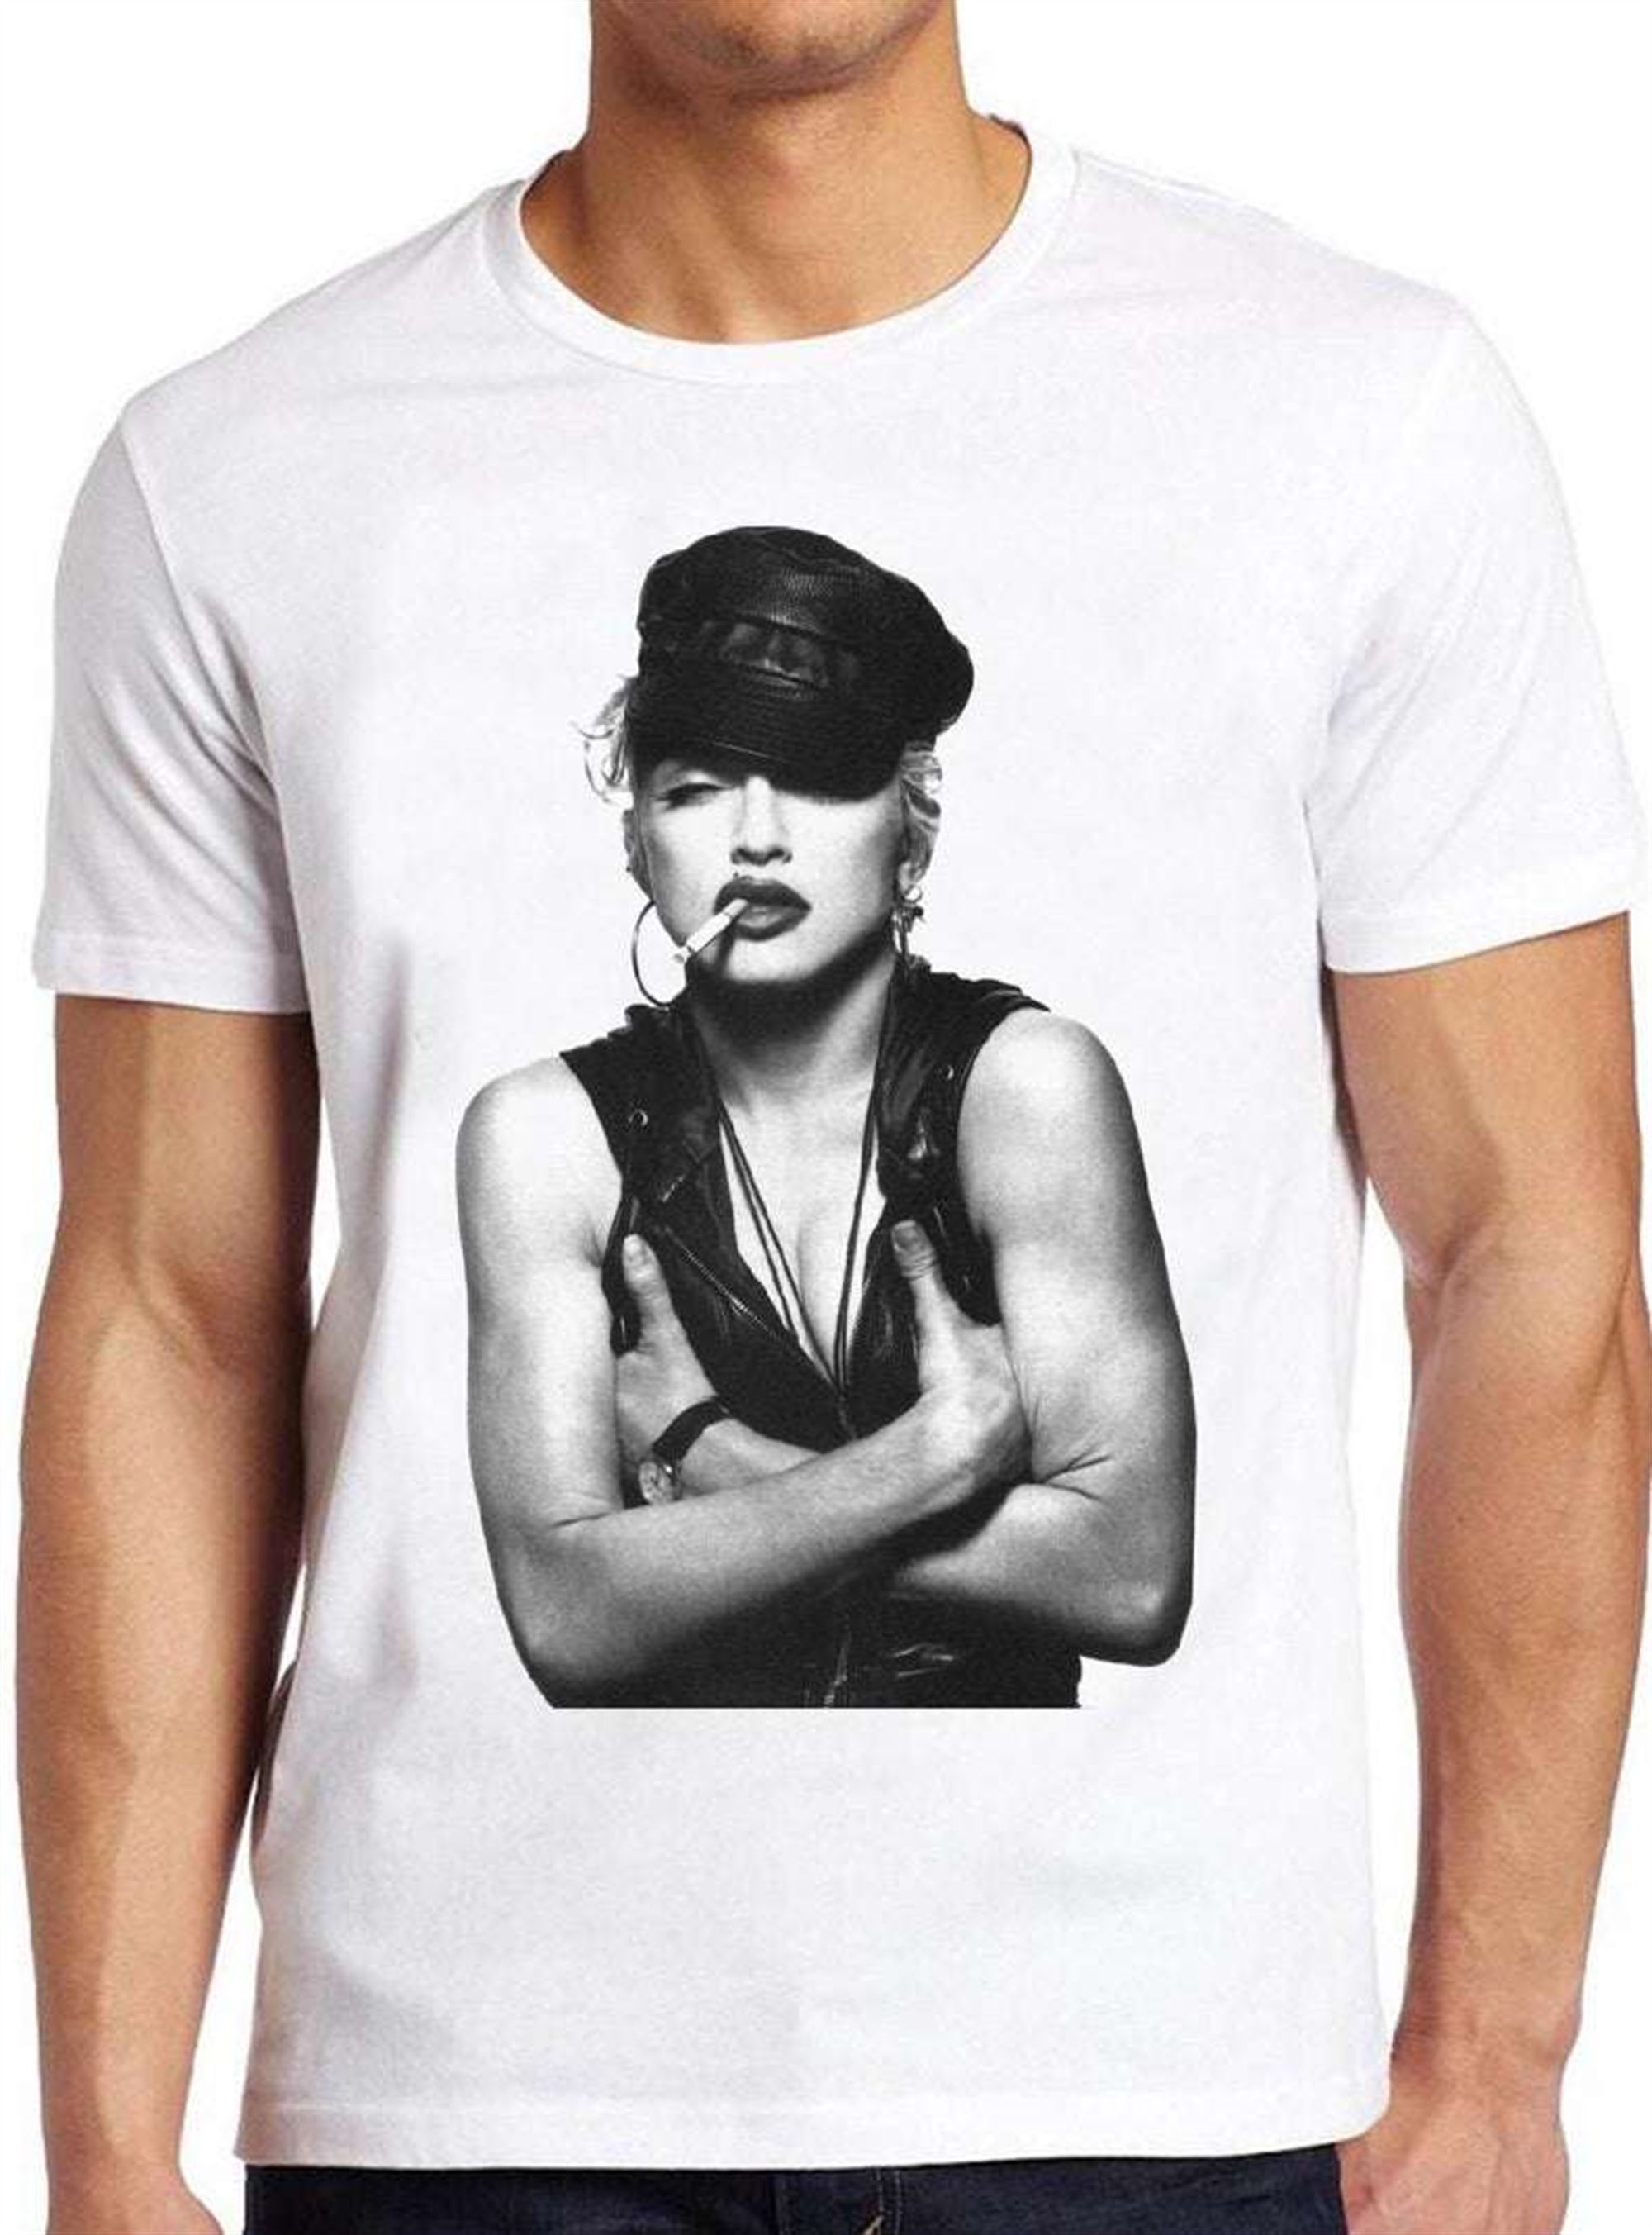 Madonna Smoking T Shirt Size Up To 5xl